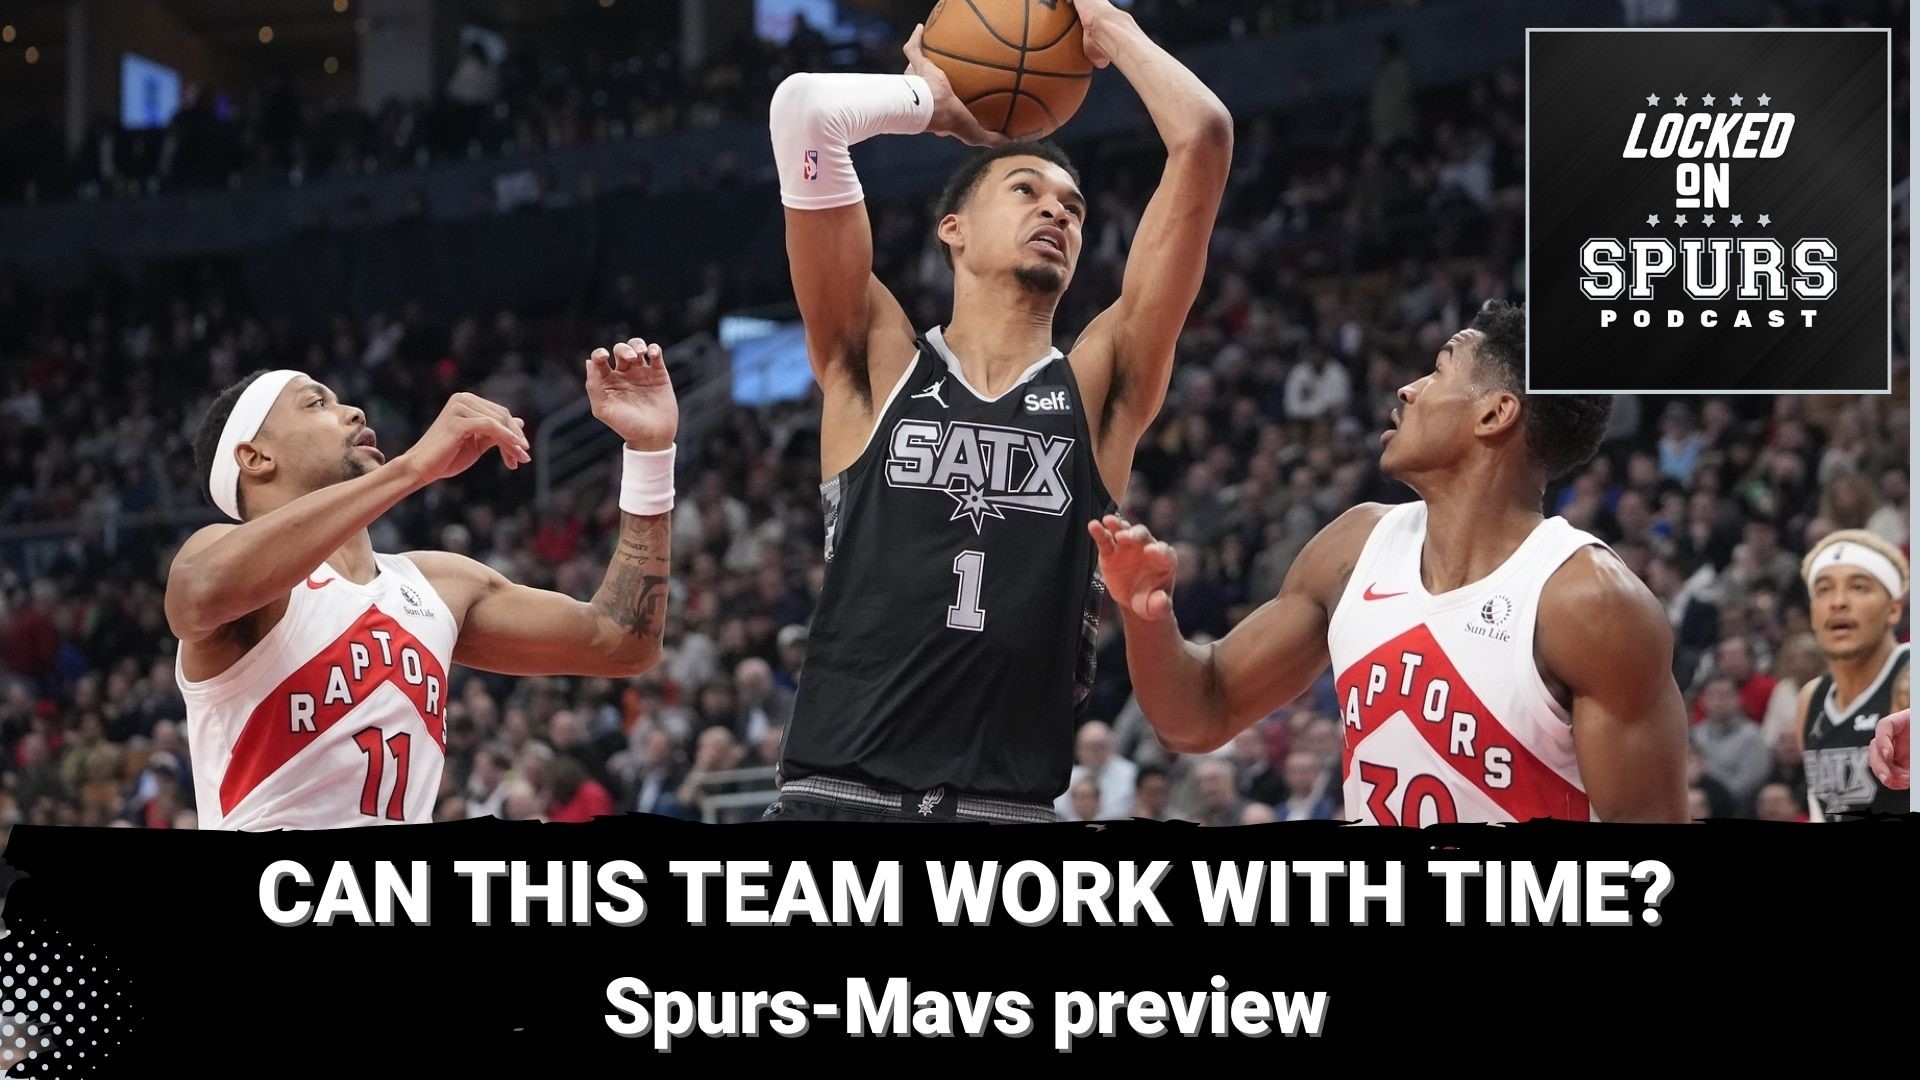 Also, previewing the Spurs-Mavericks matchup.